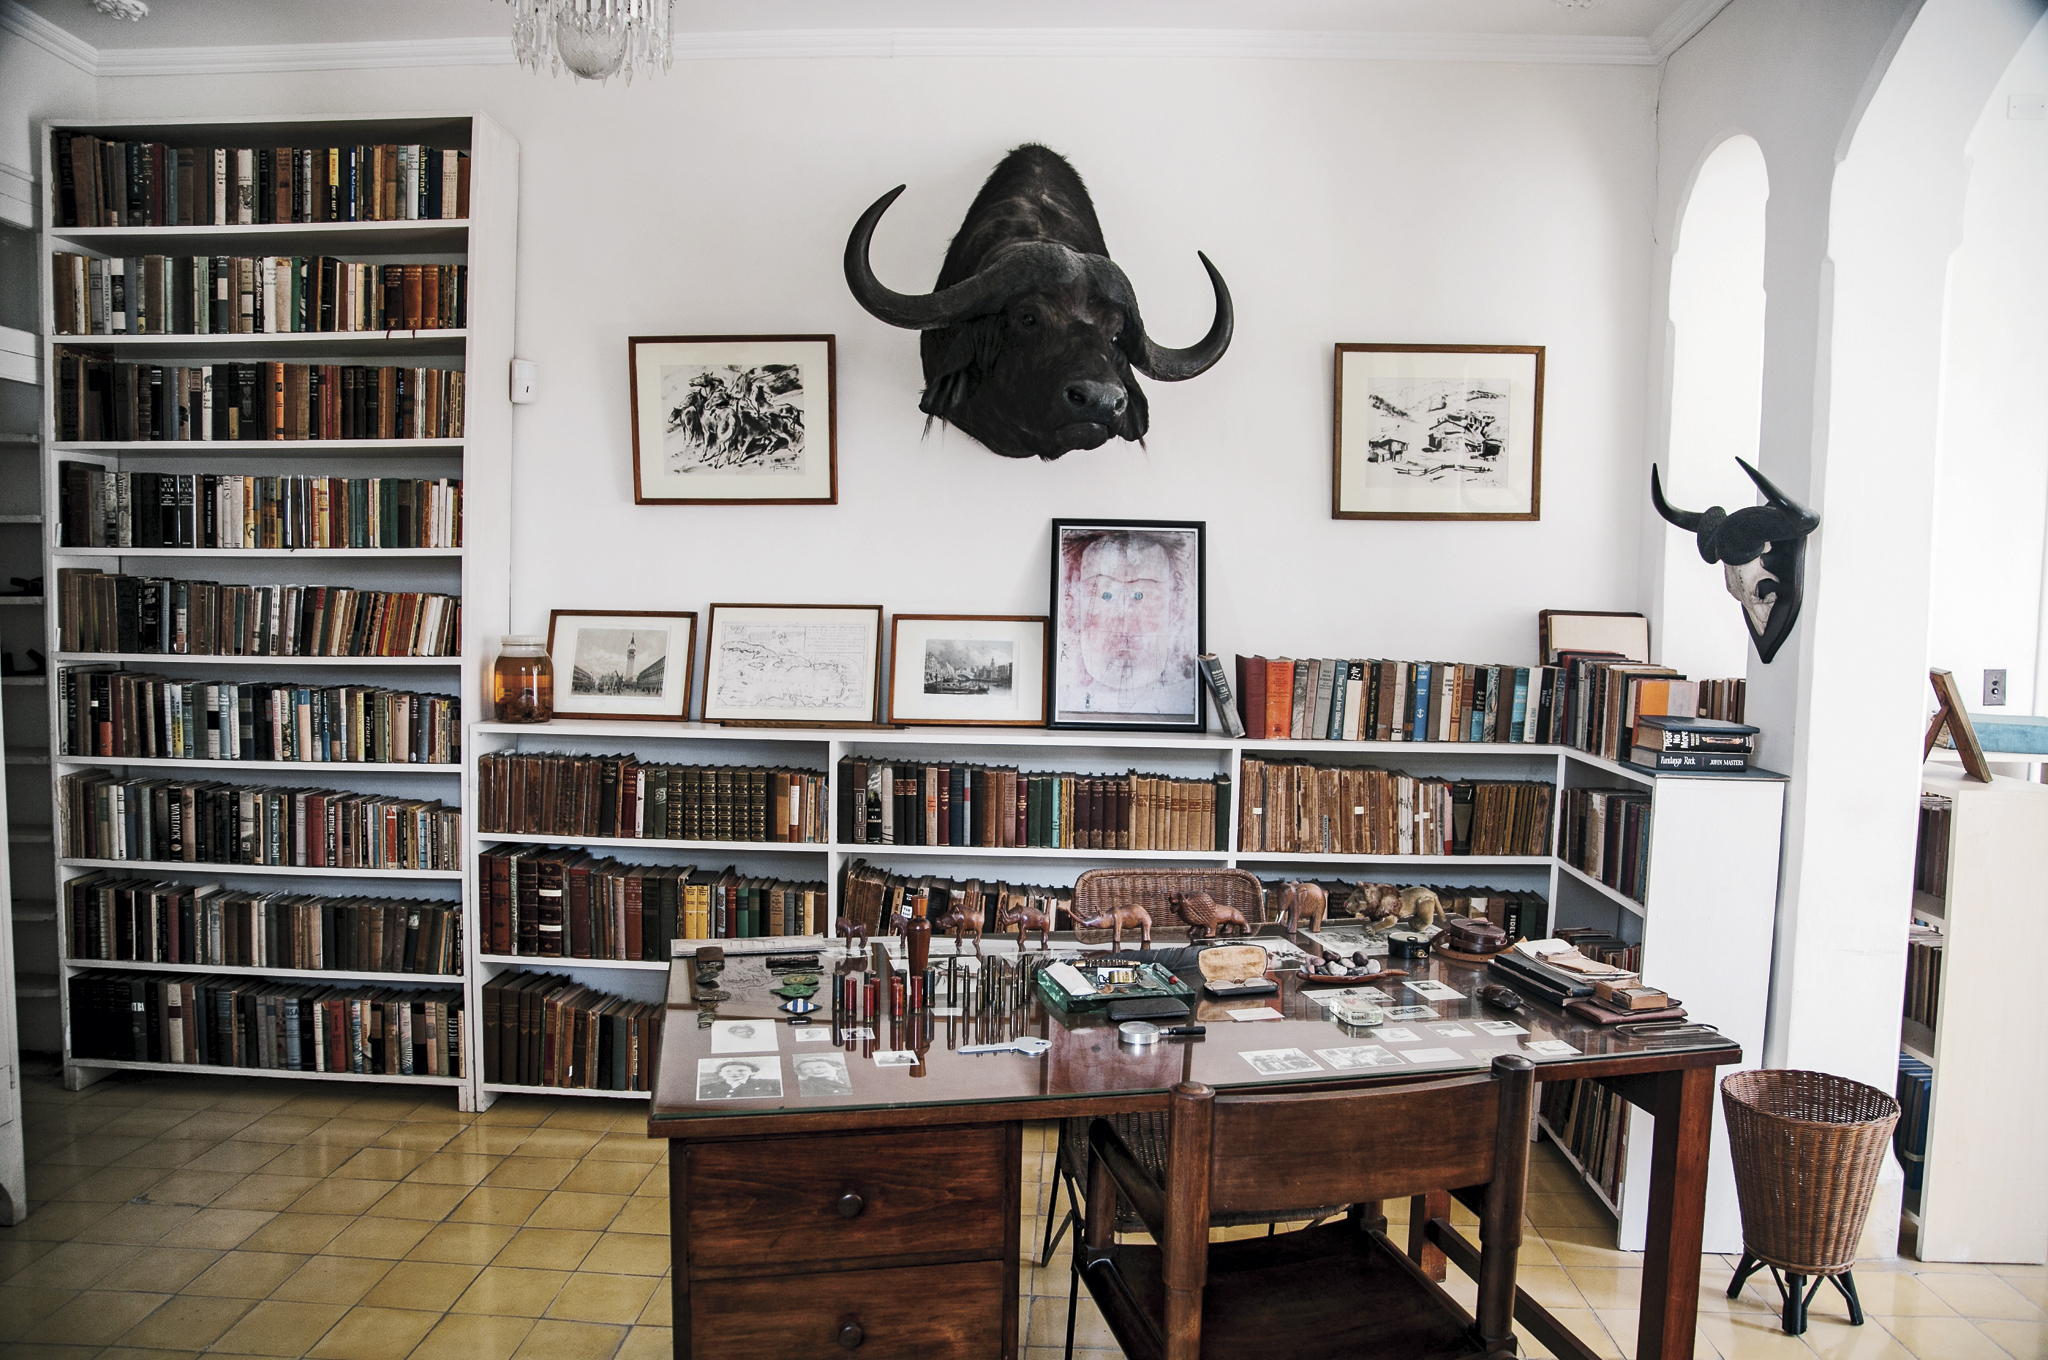 Hemingway center opens in Cuba to preserve writer’s work